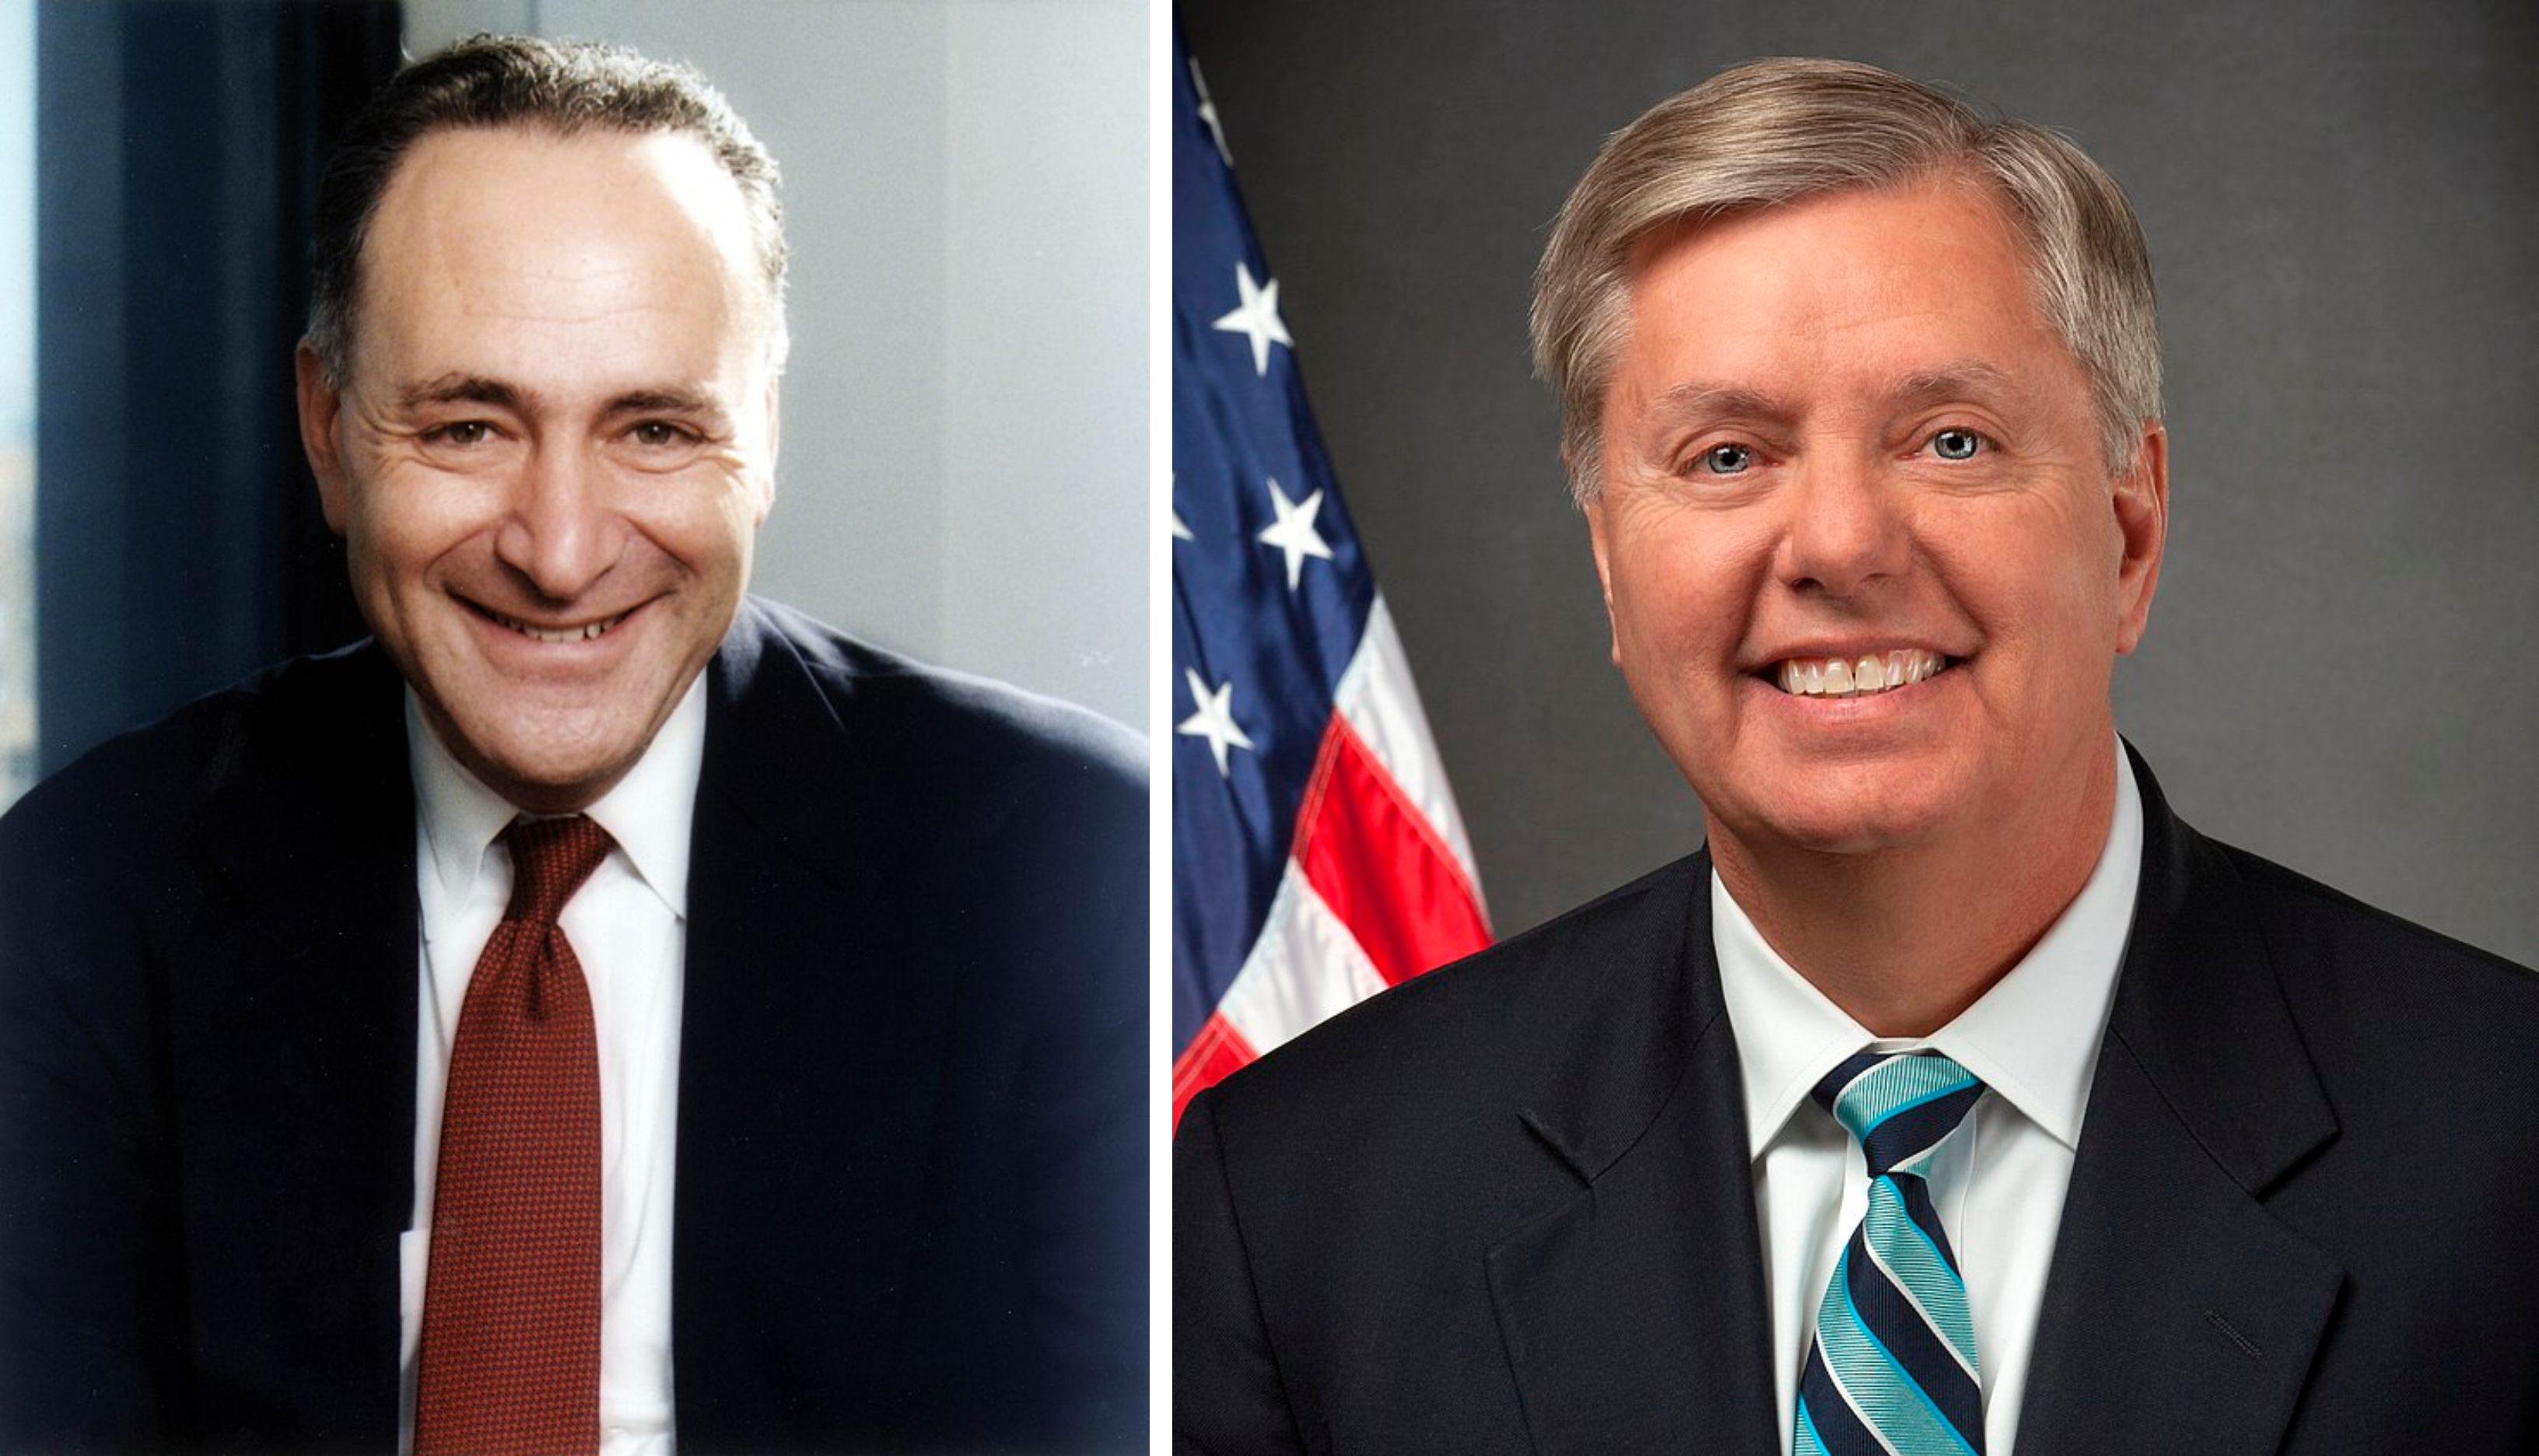 On the left, Democratic Senator Charles Schumer of New York. On the right, Republican Senator Lindsey Graham of South Carolina.